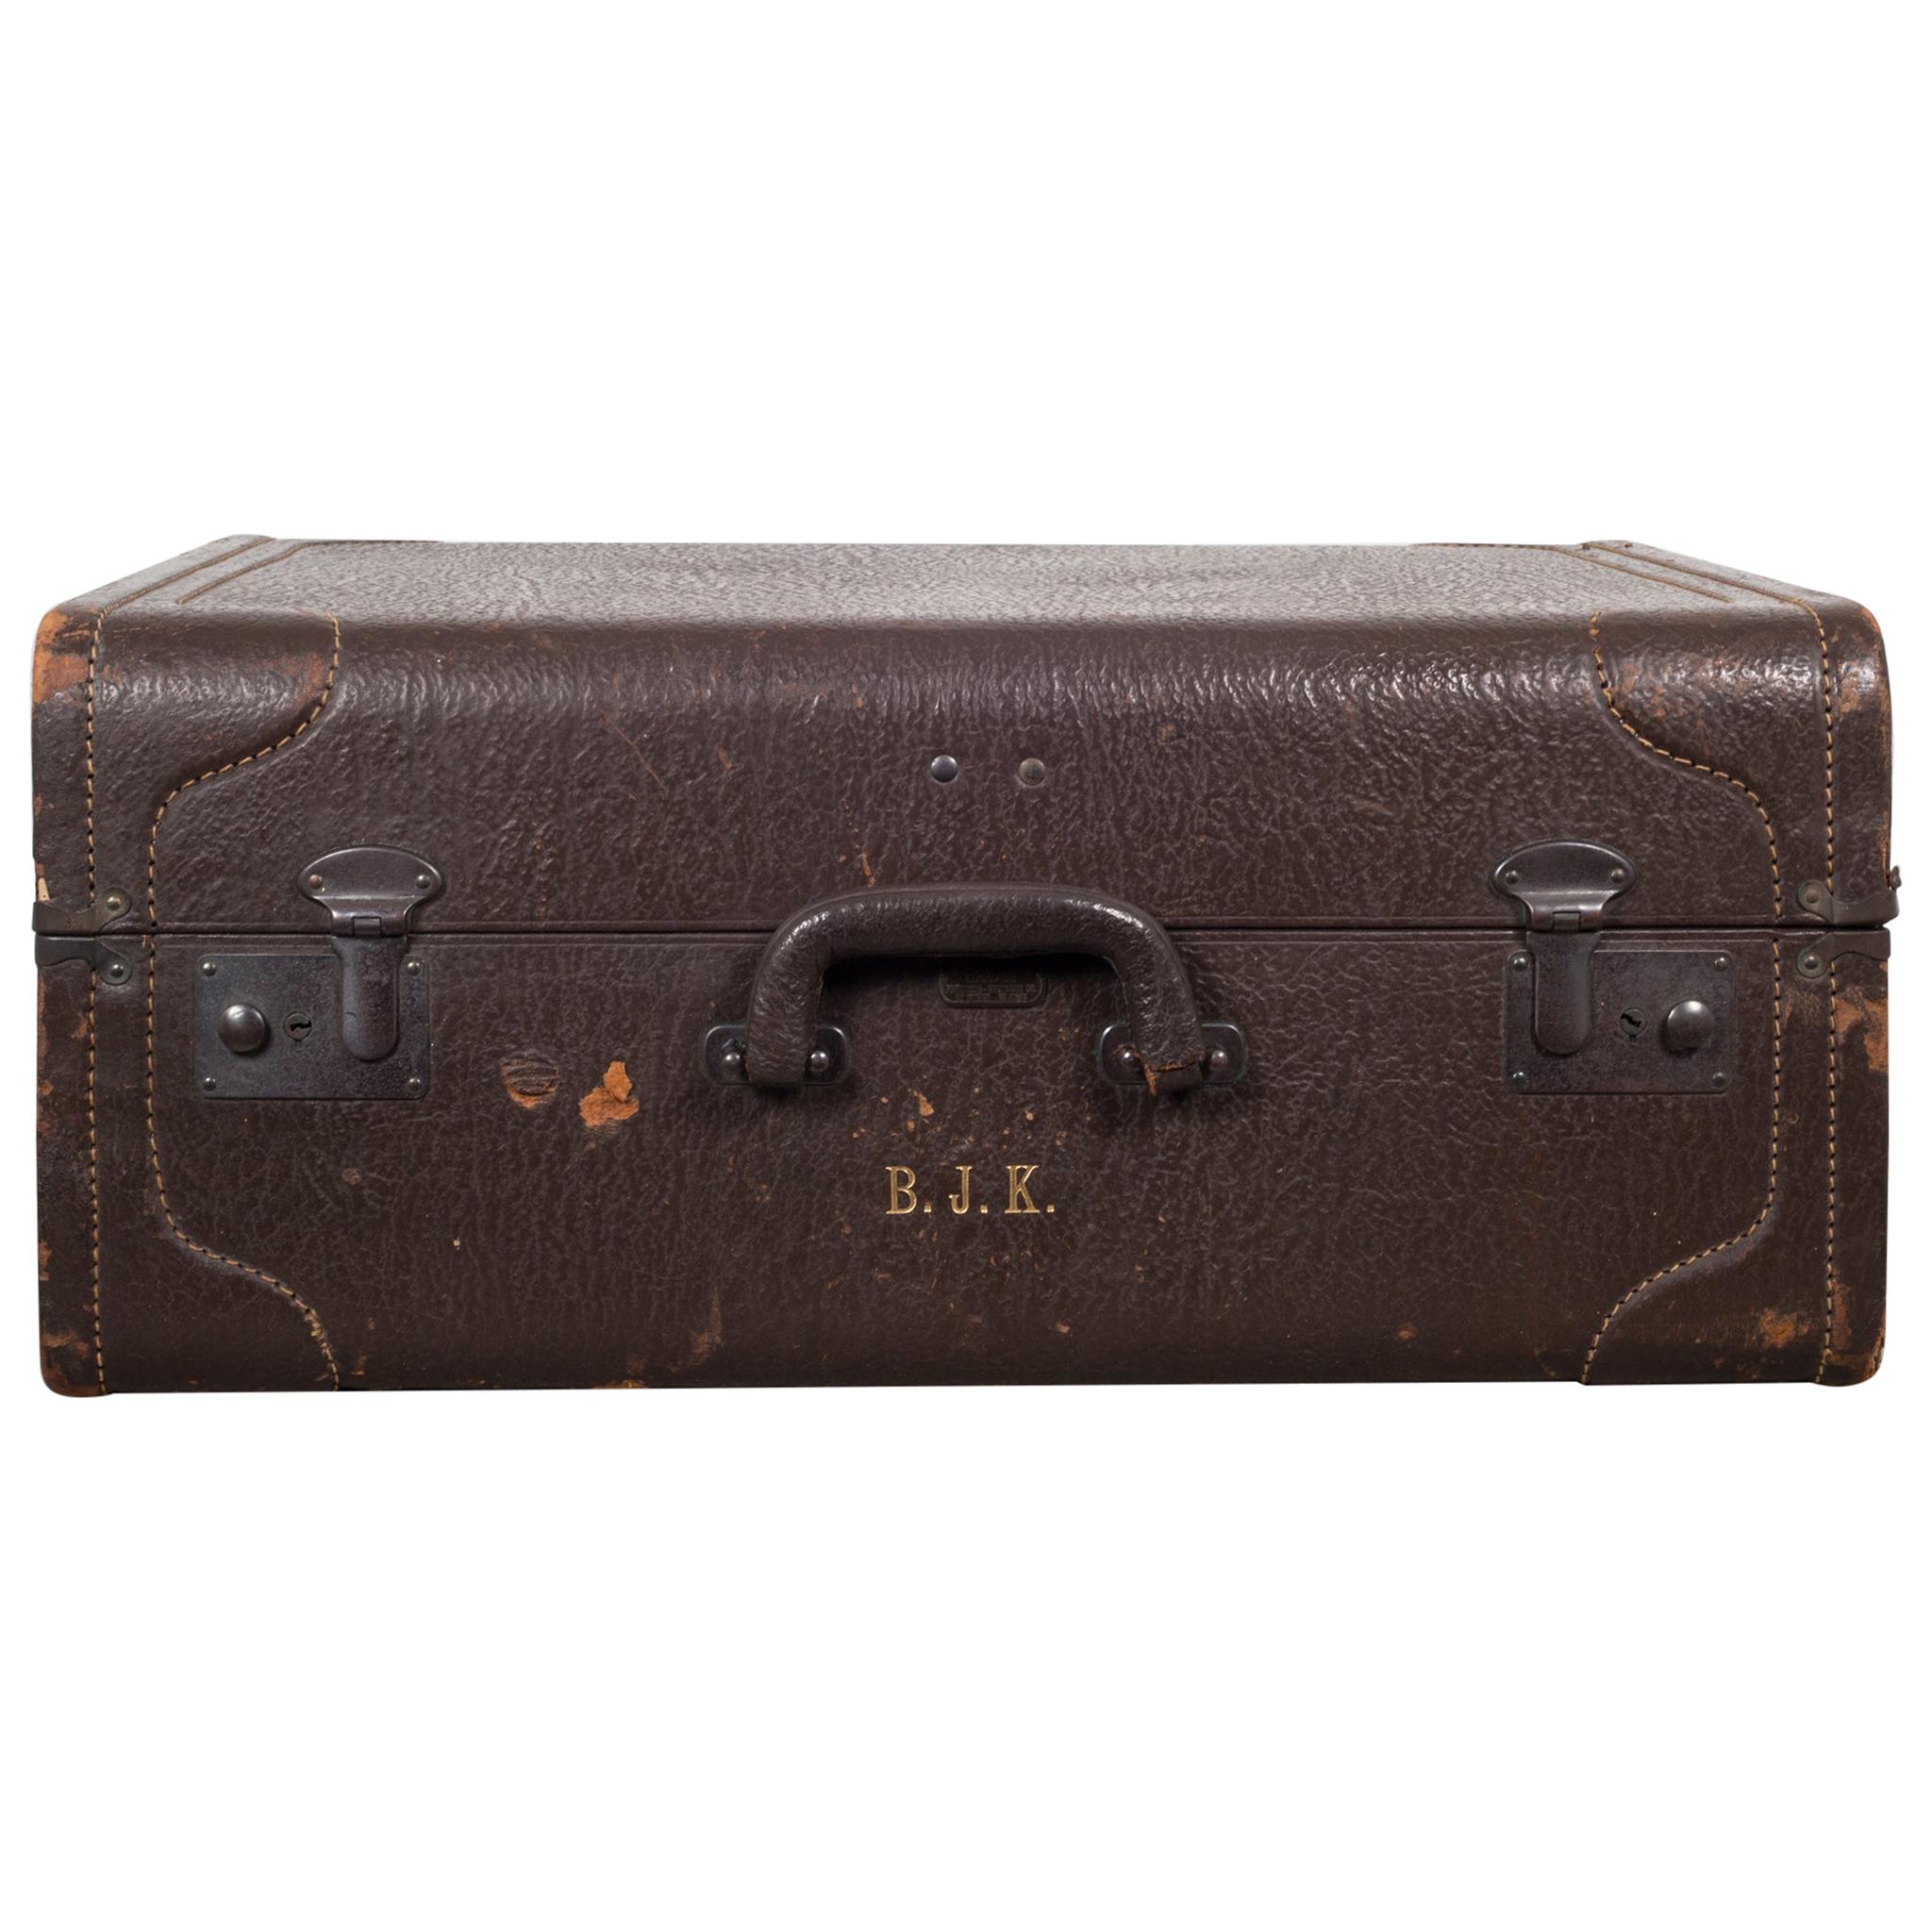 Monogrammed Leather Luggage, circa 1940